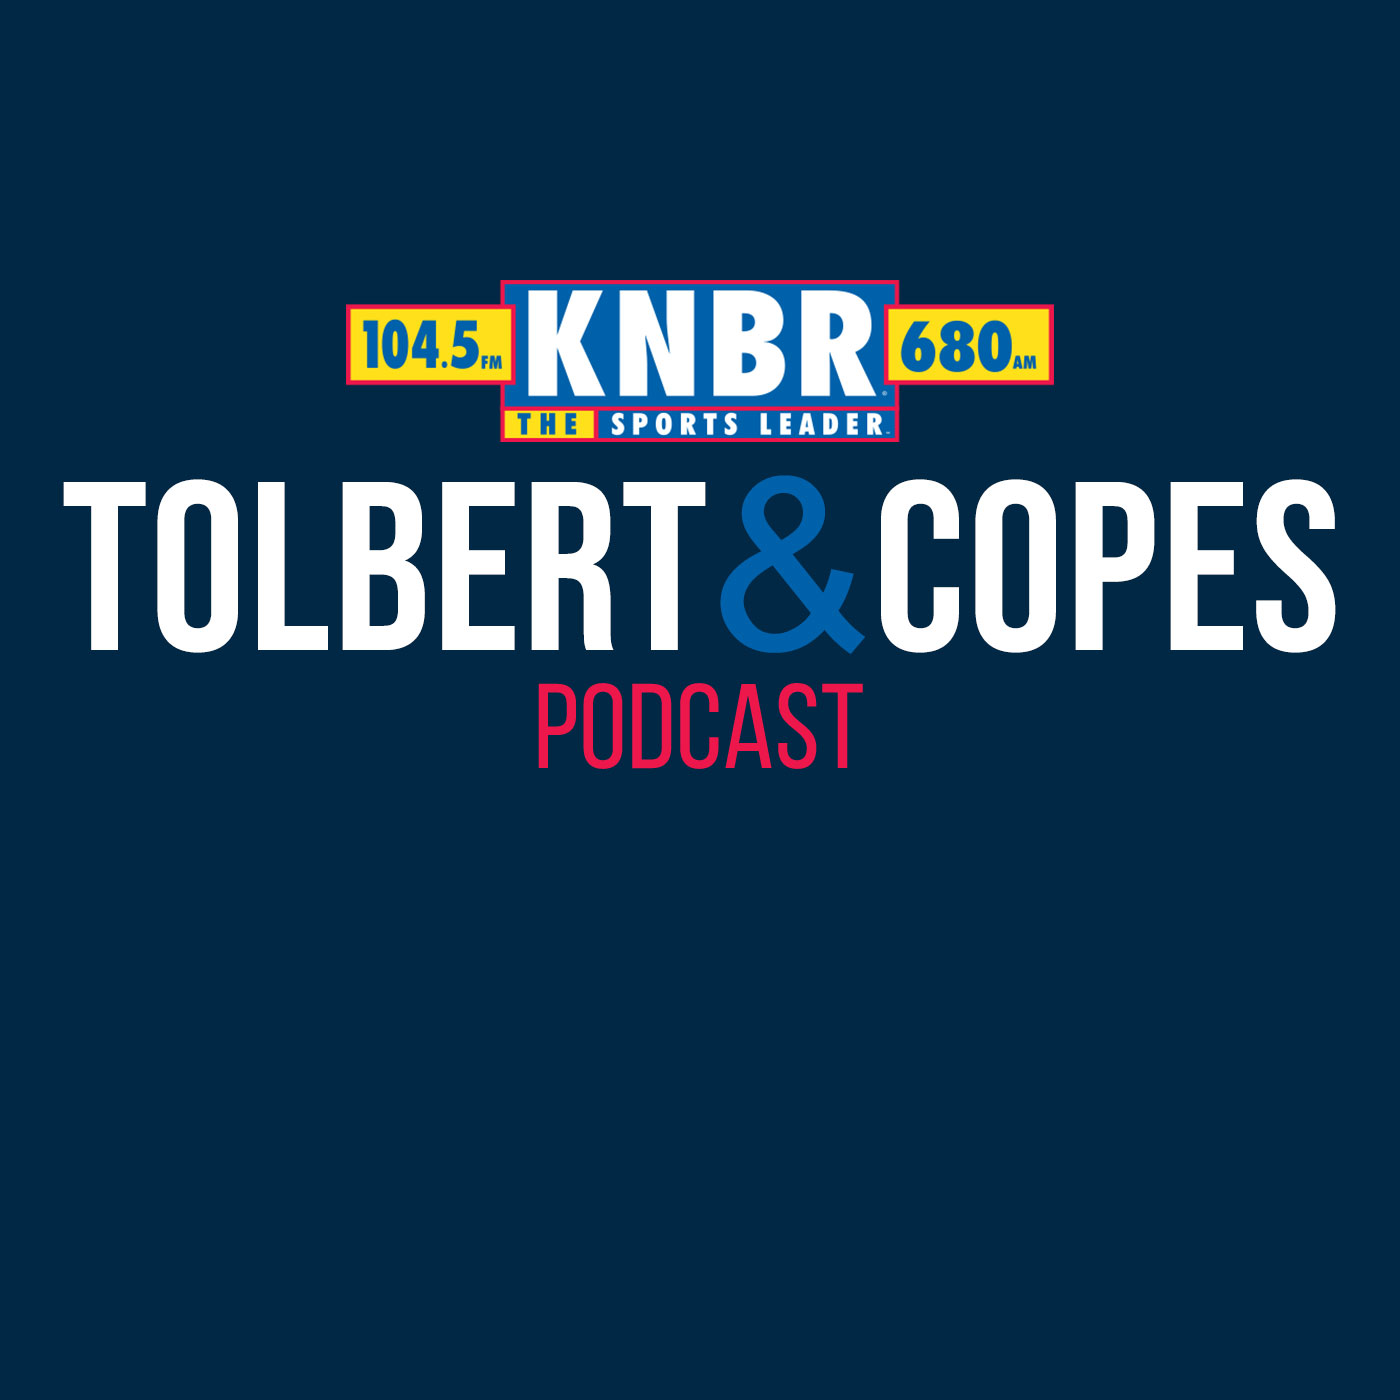 4-9 Tim Kawakami joins Tolbert & Copes to discuss the future of Klay Thompson & Jonathan Kuminga on the Warriors